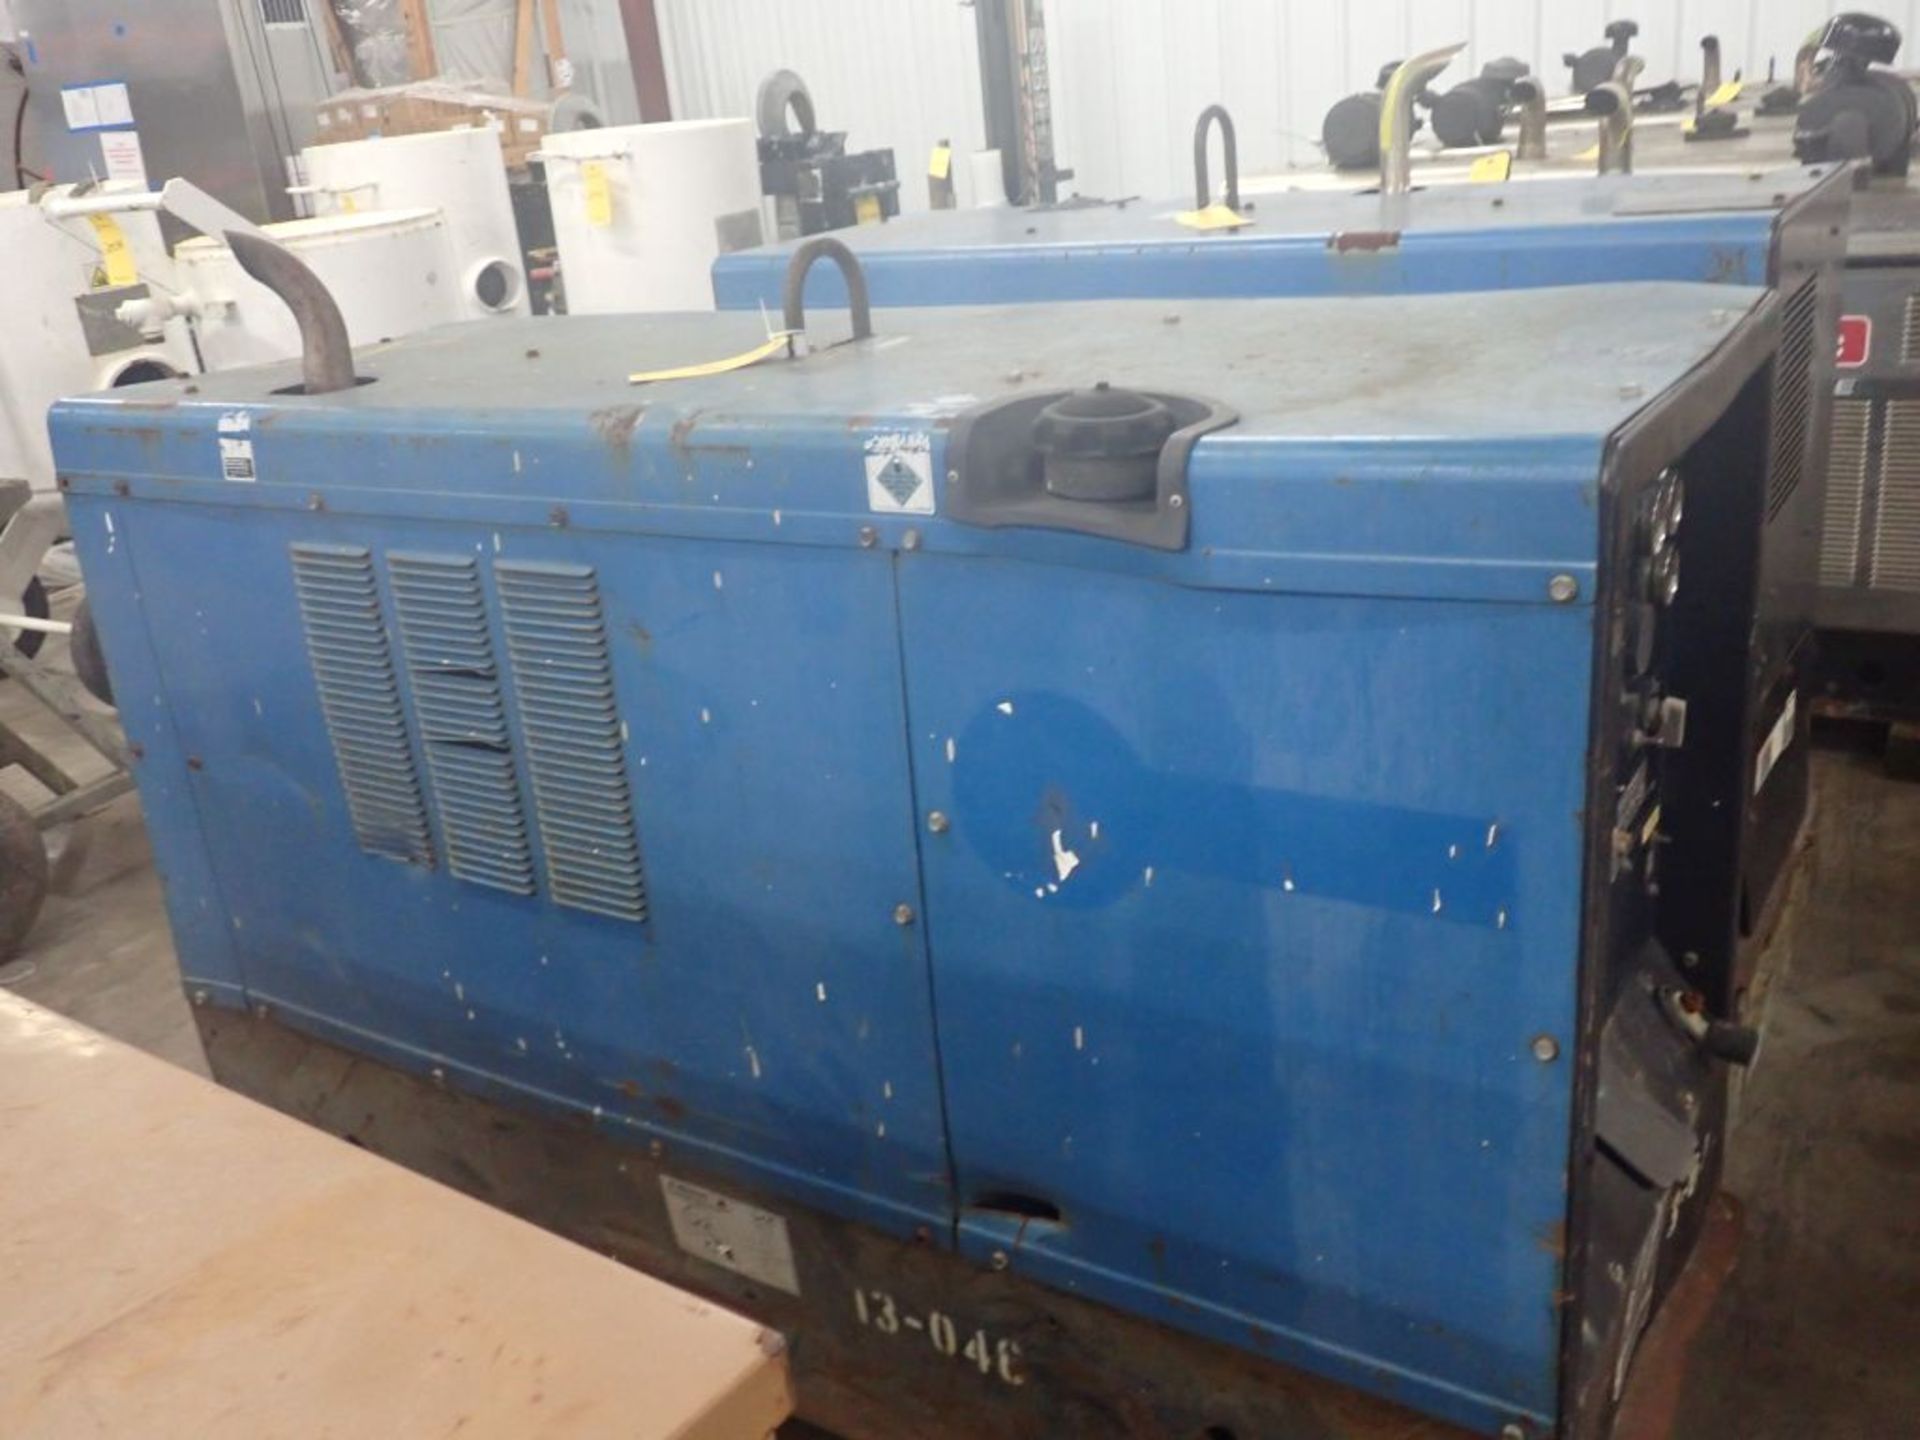 Miller Big Blue Turbo DC Welding Generator | Stock No. 907157; 8915 Hours; Engine Driven